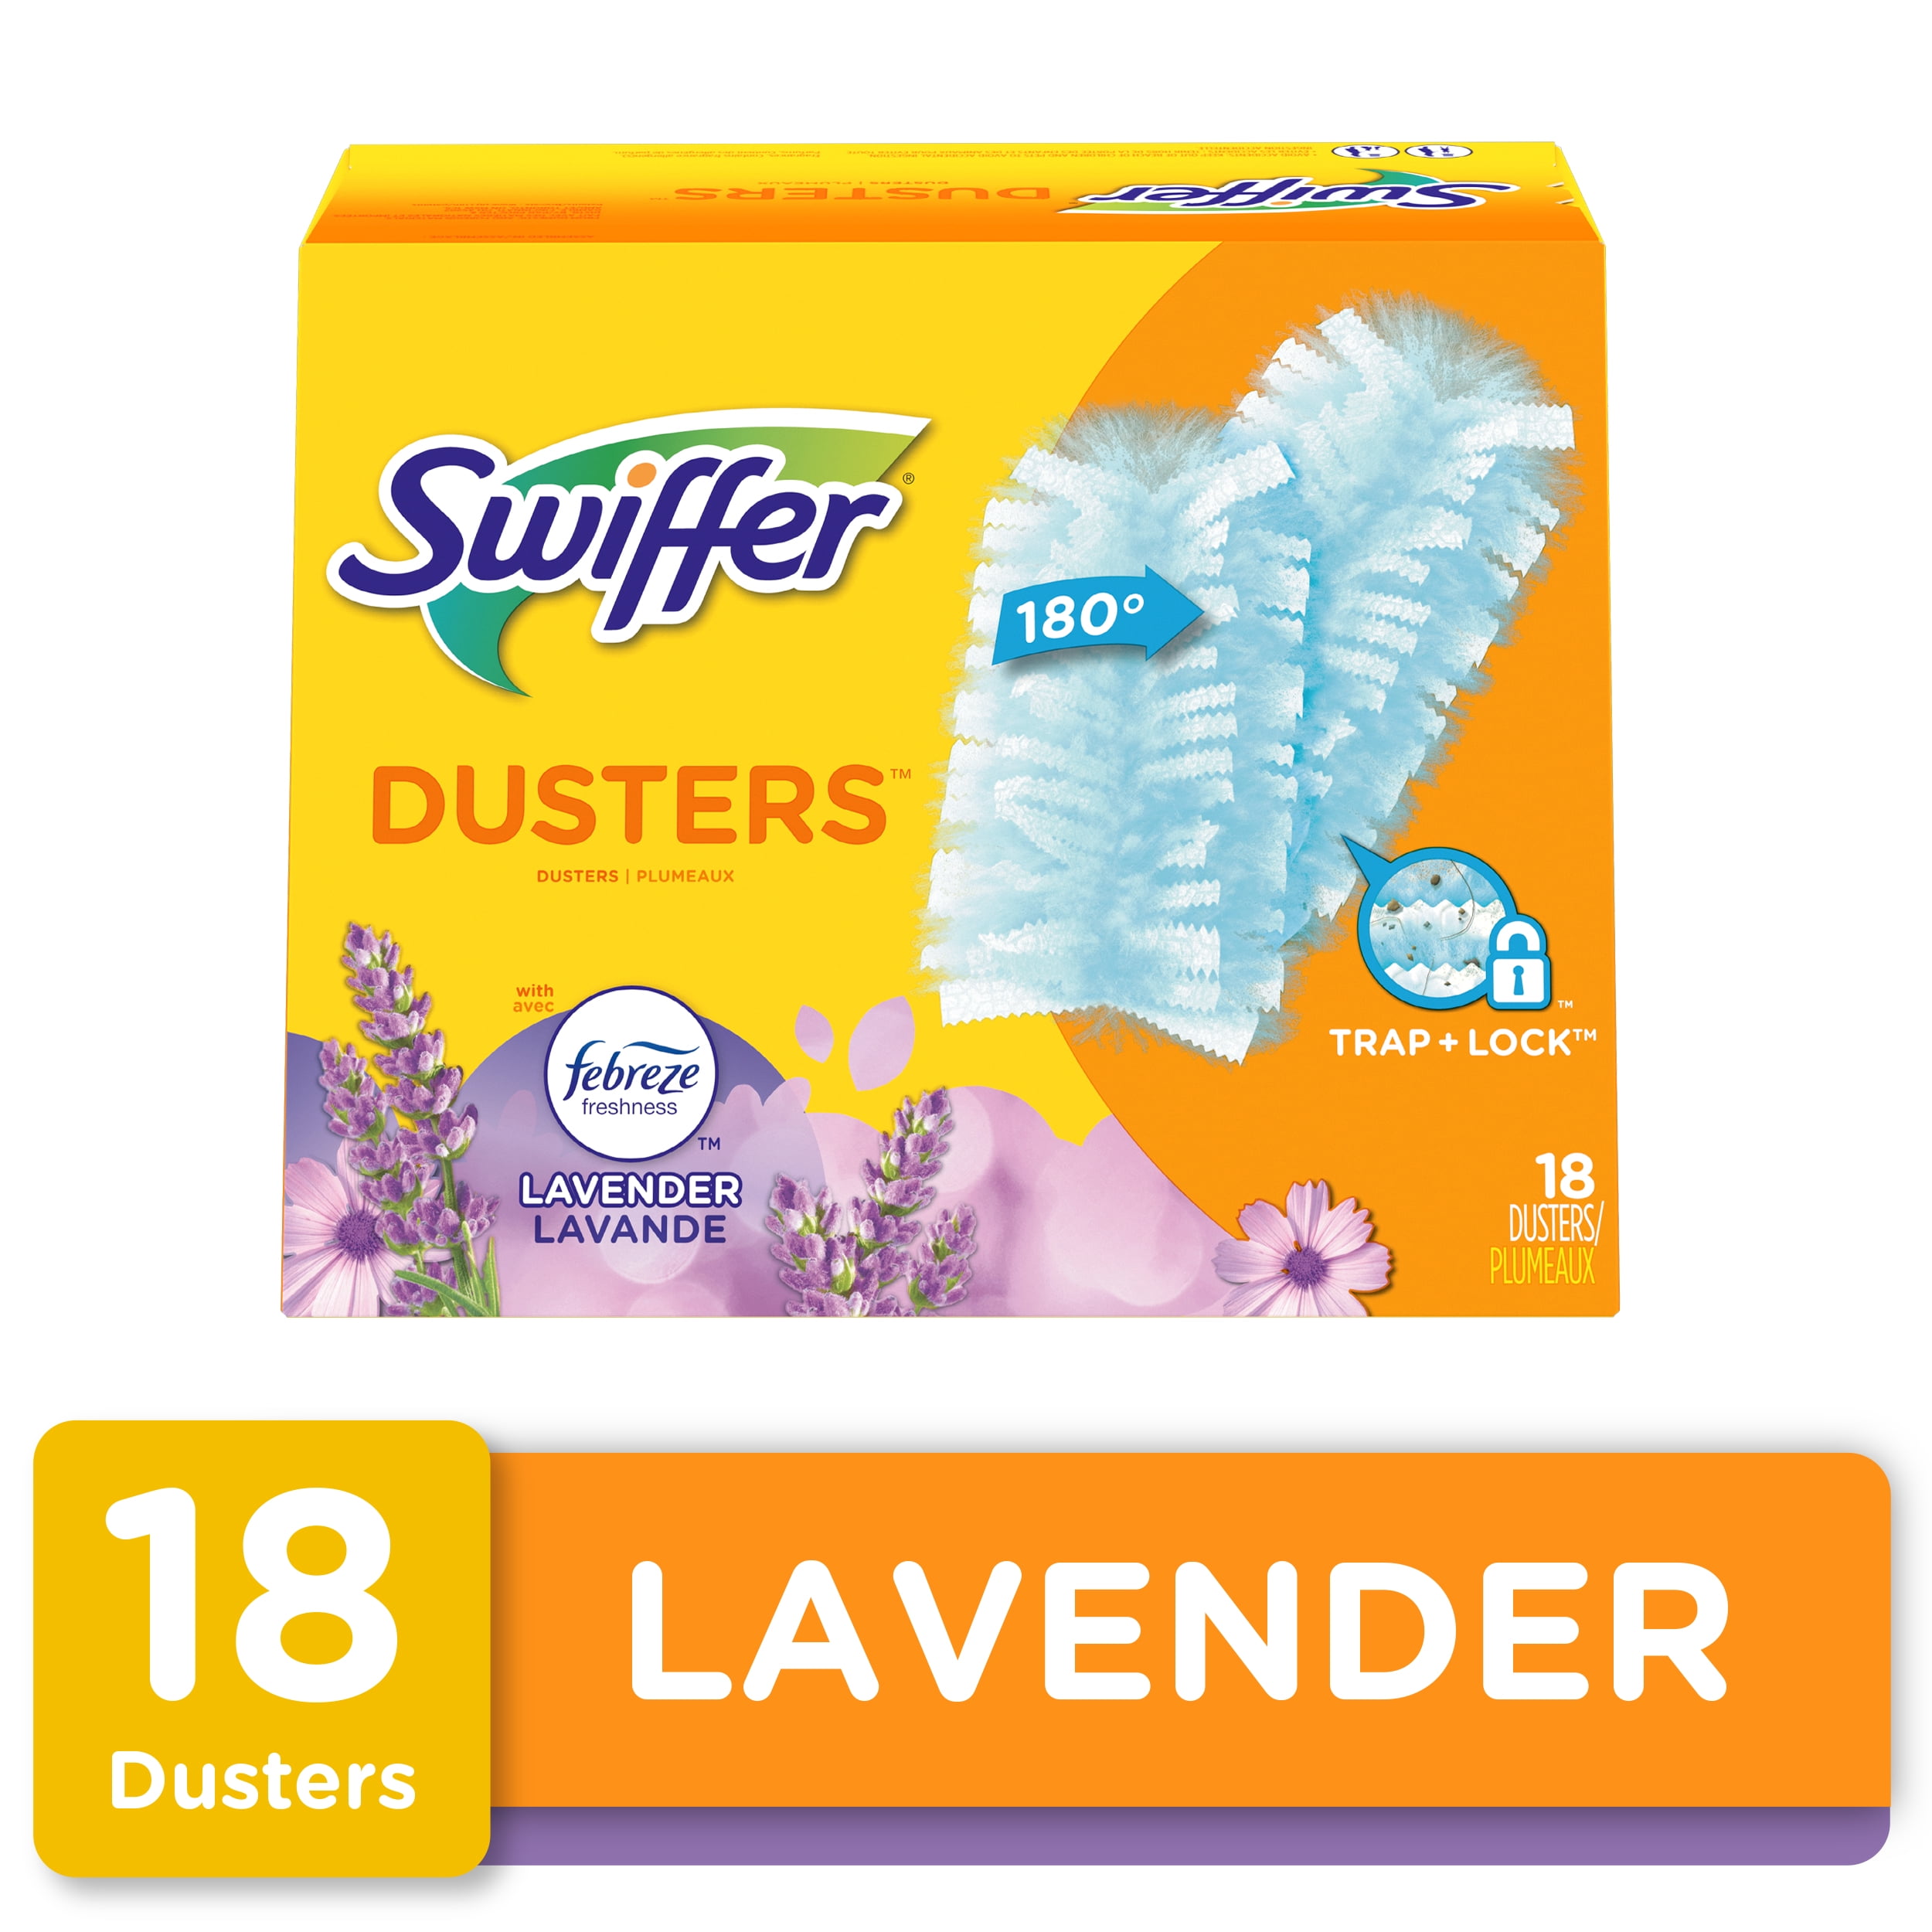 Swiffer 180 Dusters Multi Surface Refills 10 Count Citrus & Zest scent